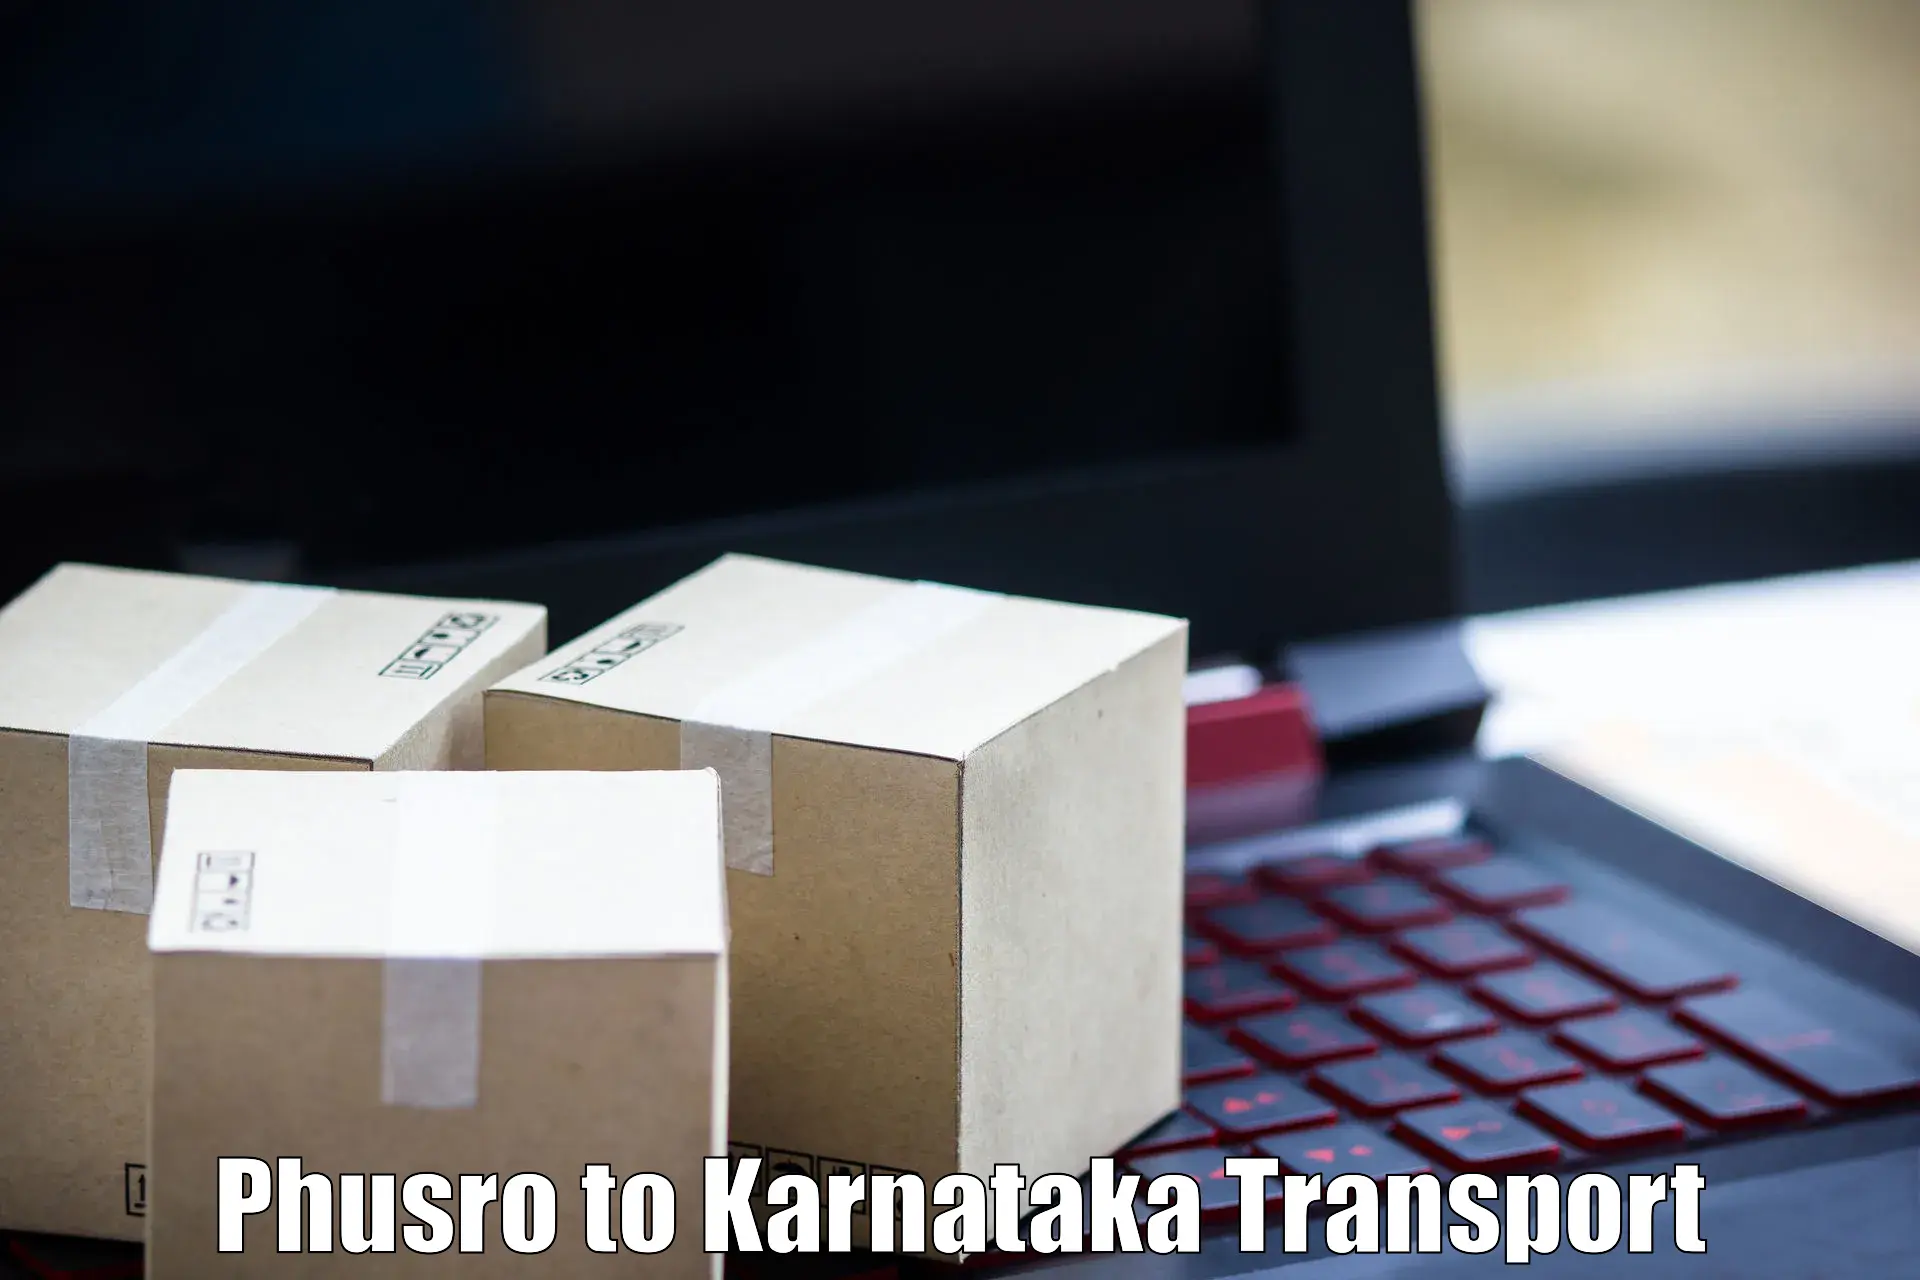 Furniture transport service Phusro to Bengaluru